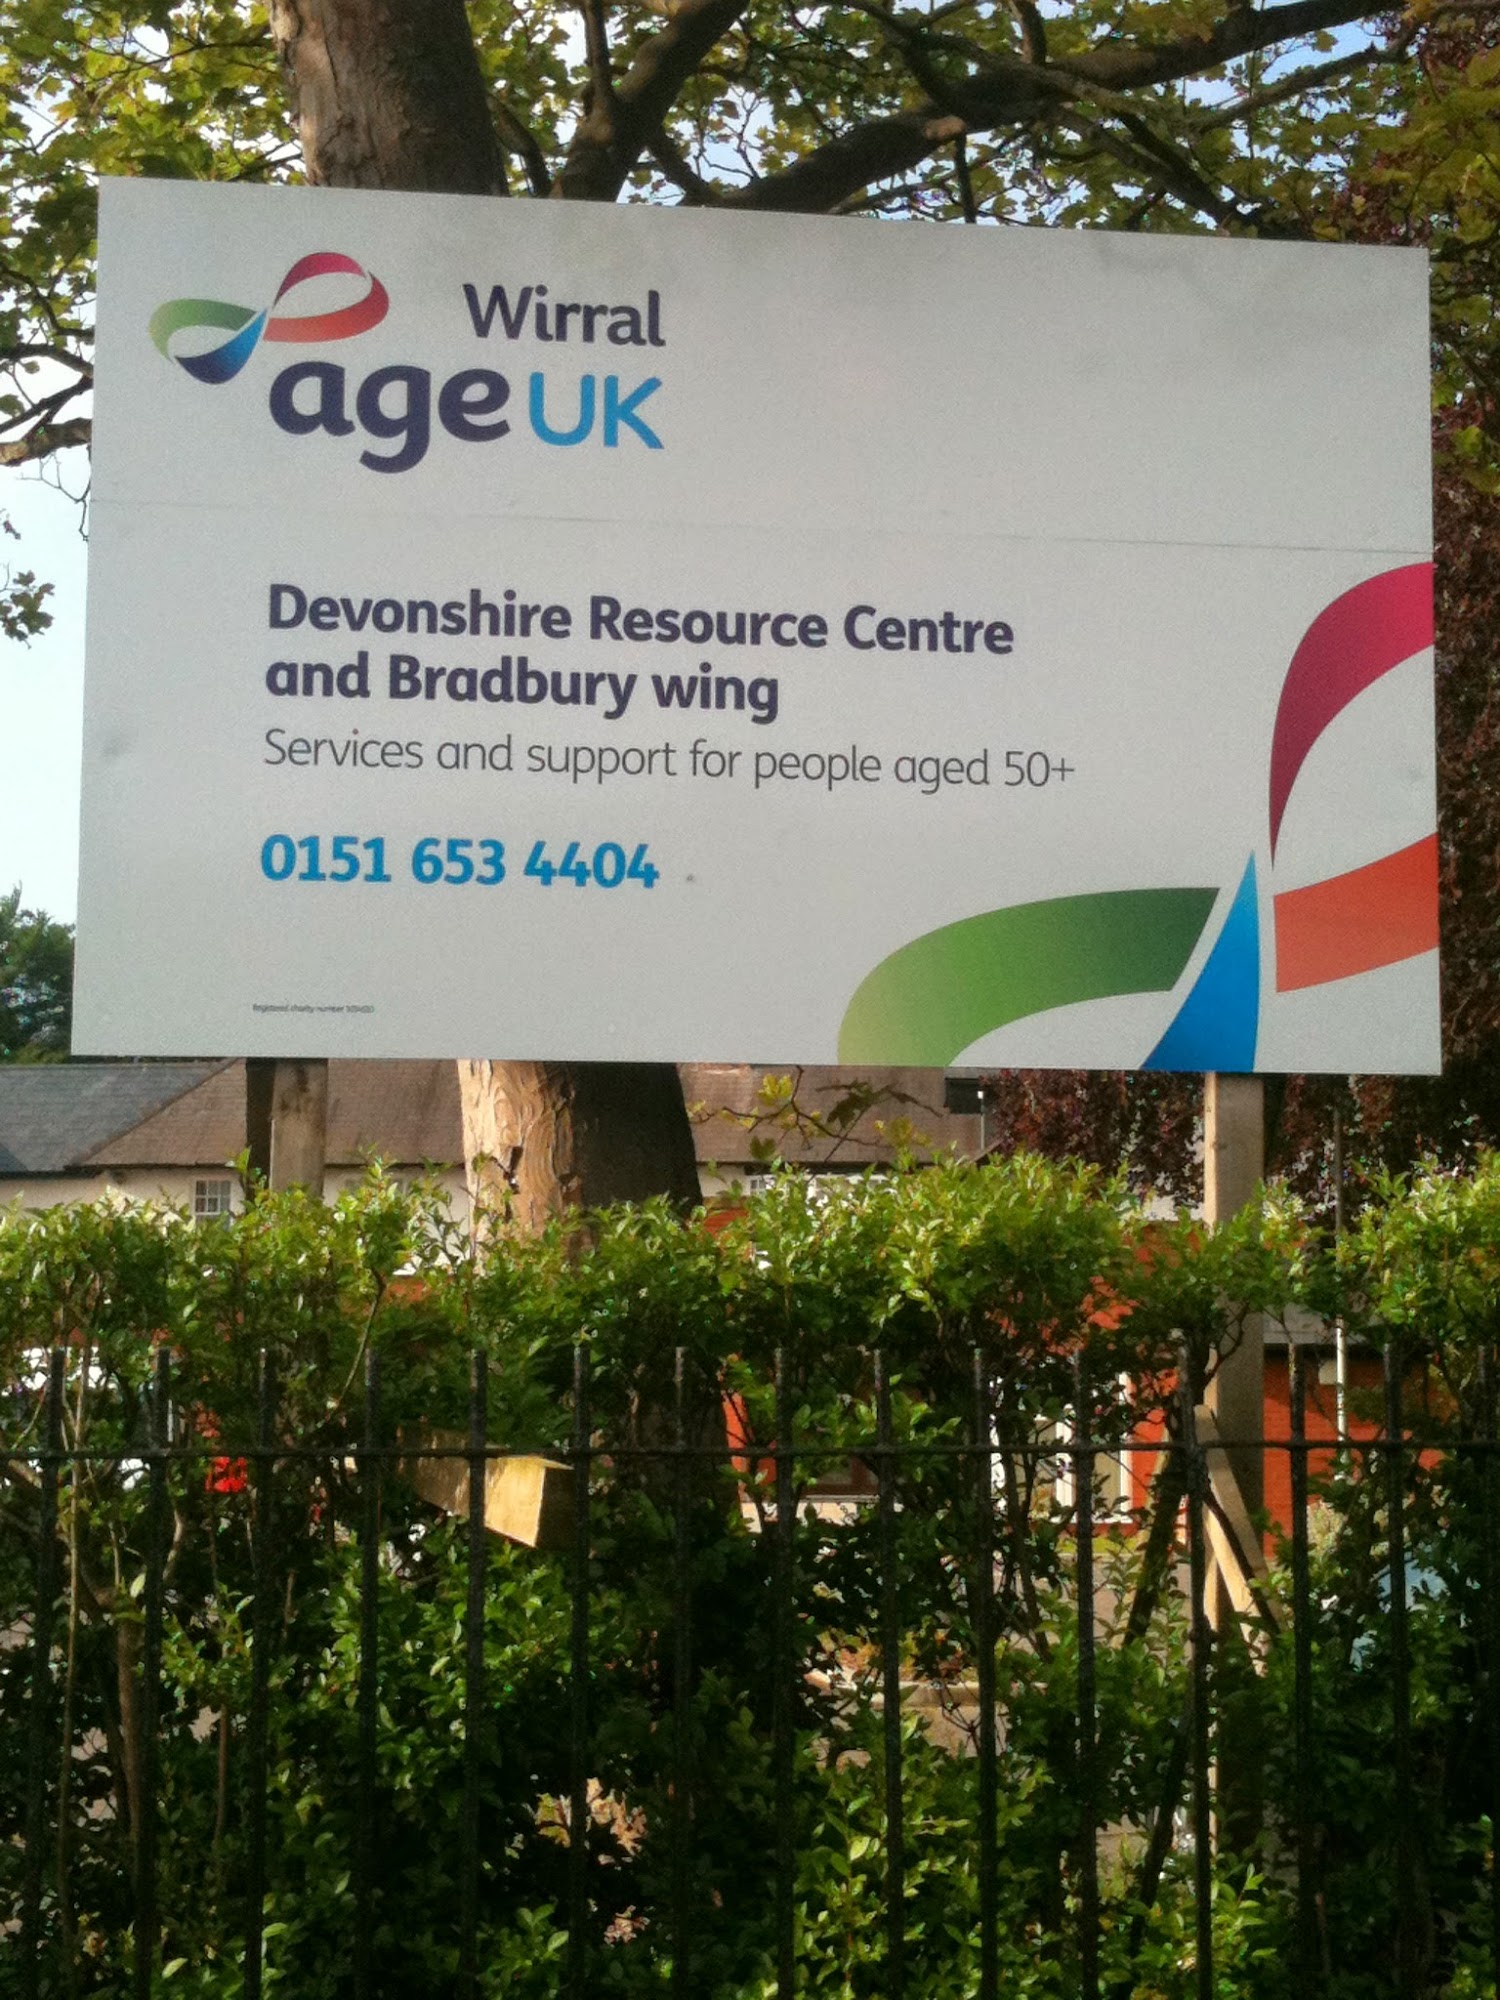 Age UK Wirral - Devonshire Resource Centre